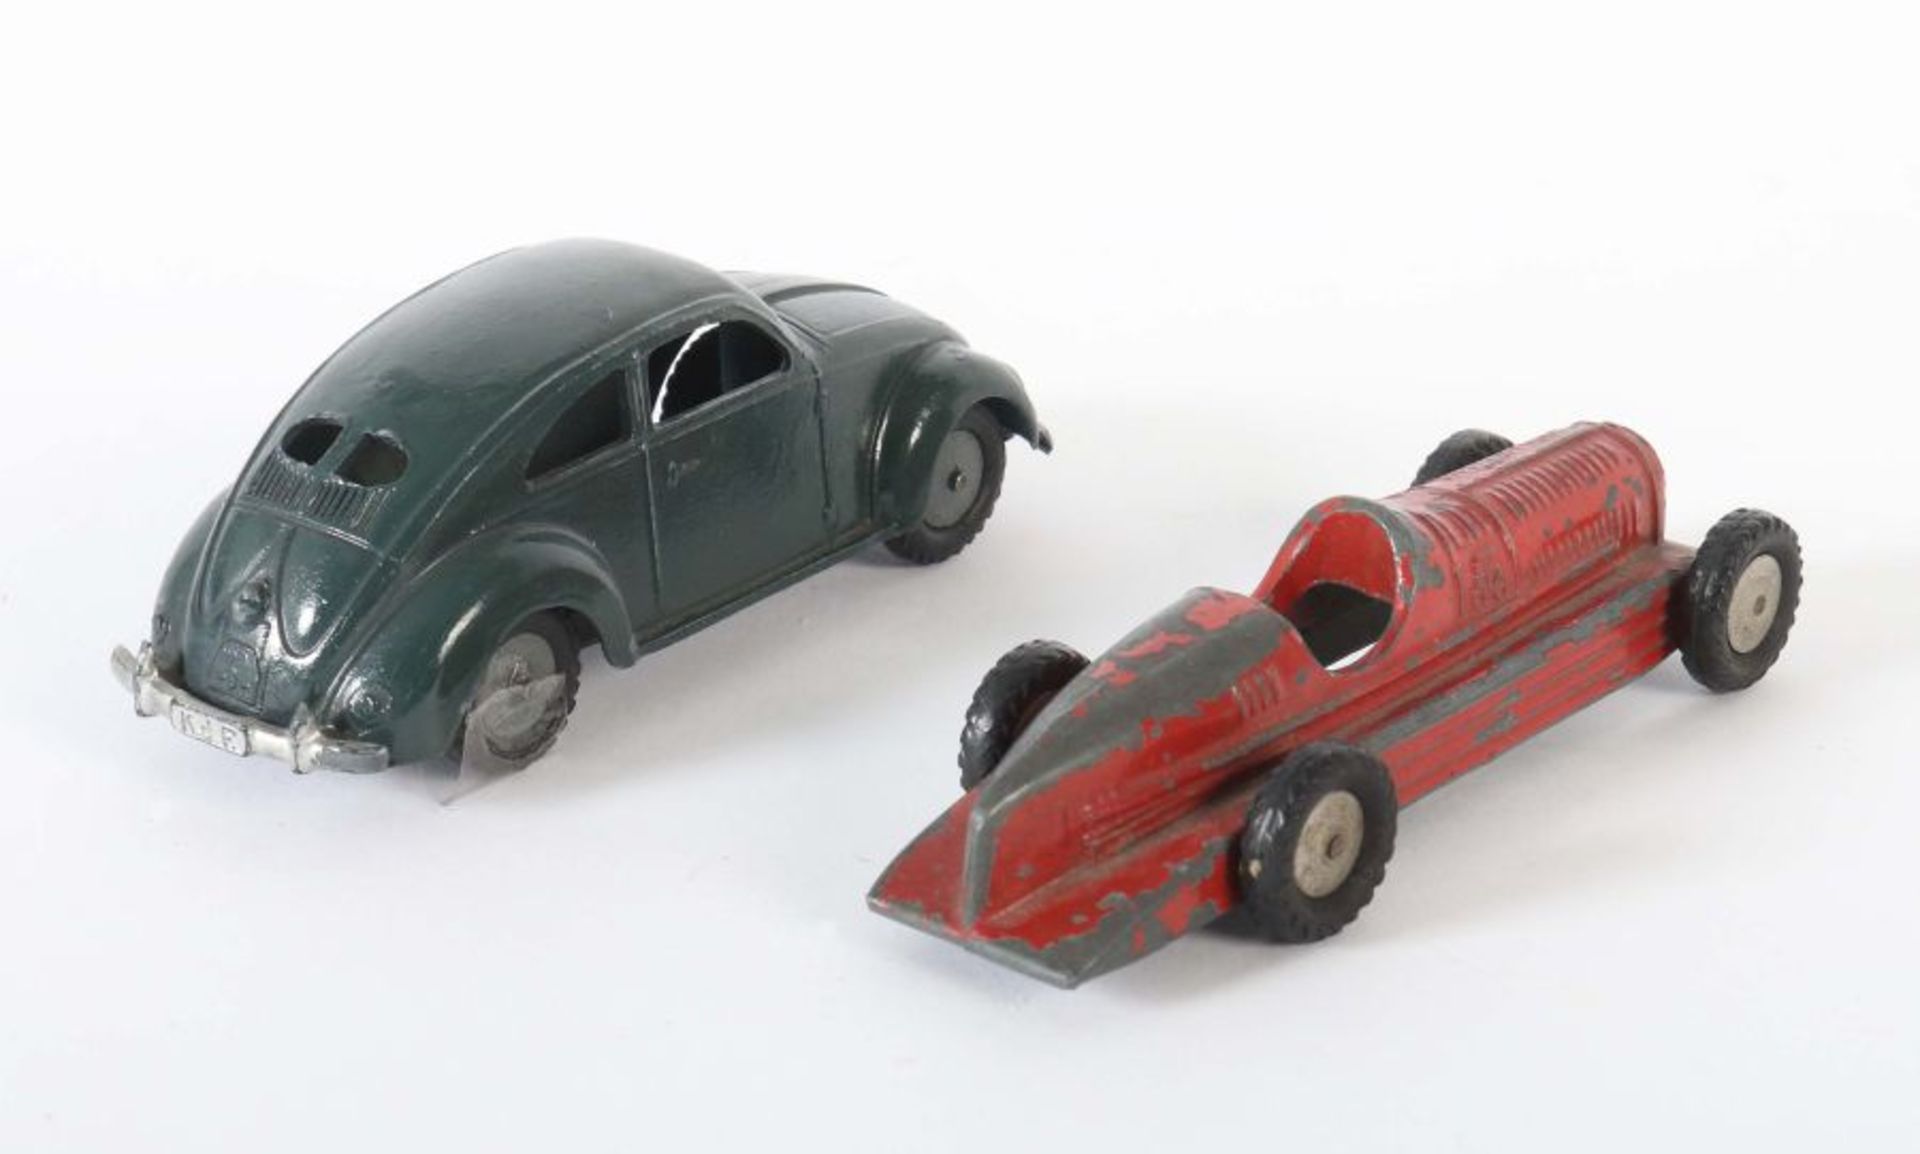 2 Modellfahrzeuge Märklin, ca. 1936-40, Guss, 1 x VW Käfer, Modell 5521/9, graugrün, Bodenprägung, - Bild 2 aus 2